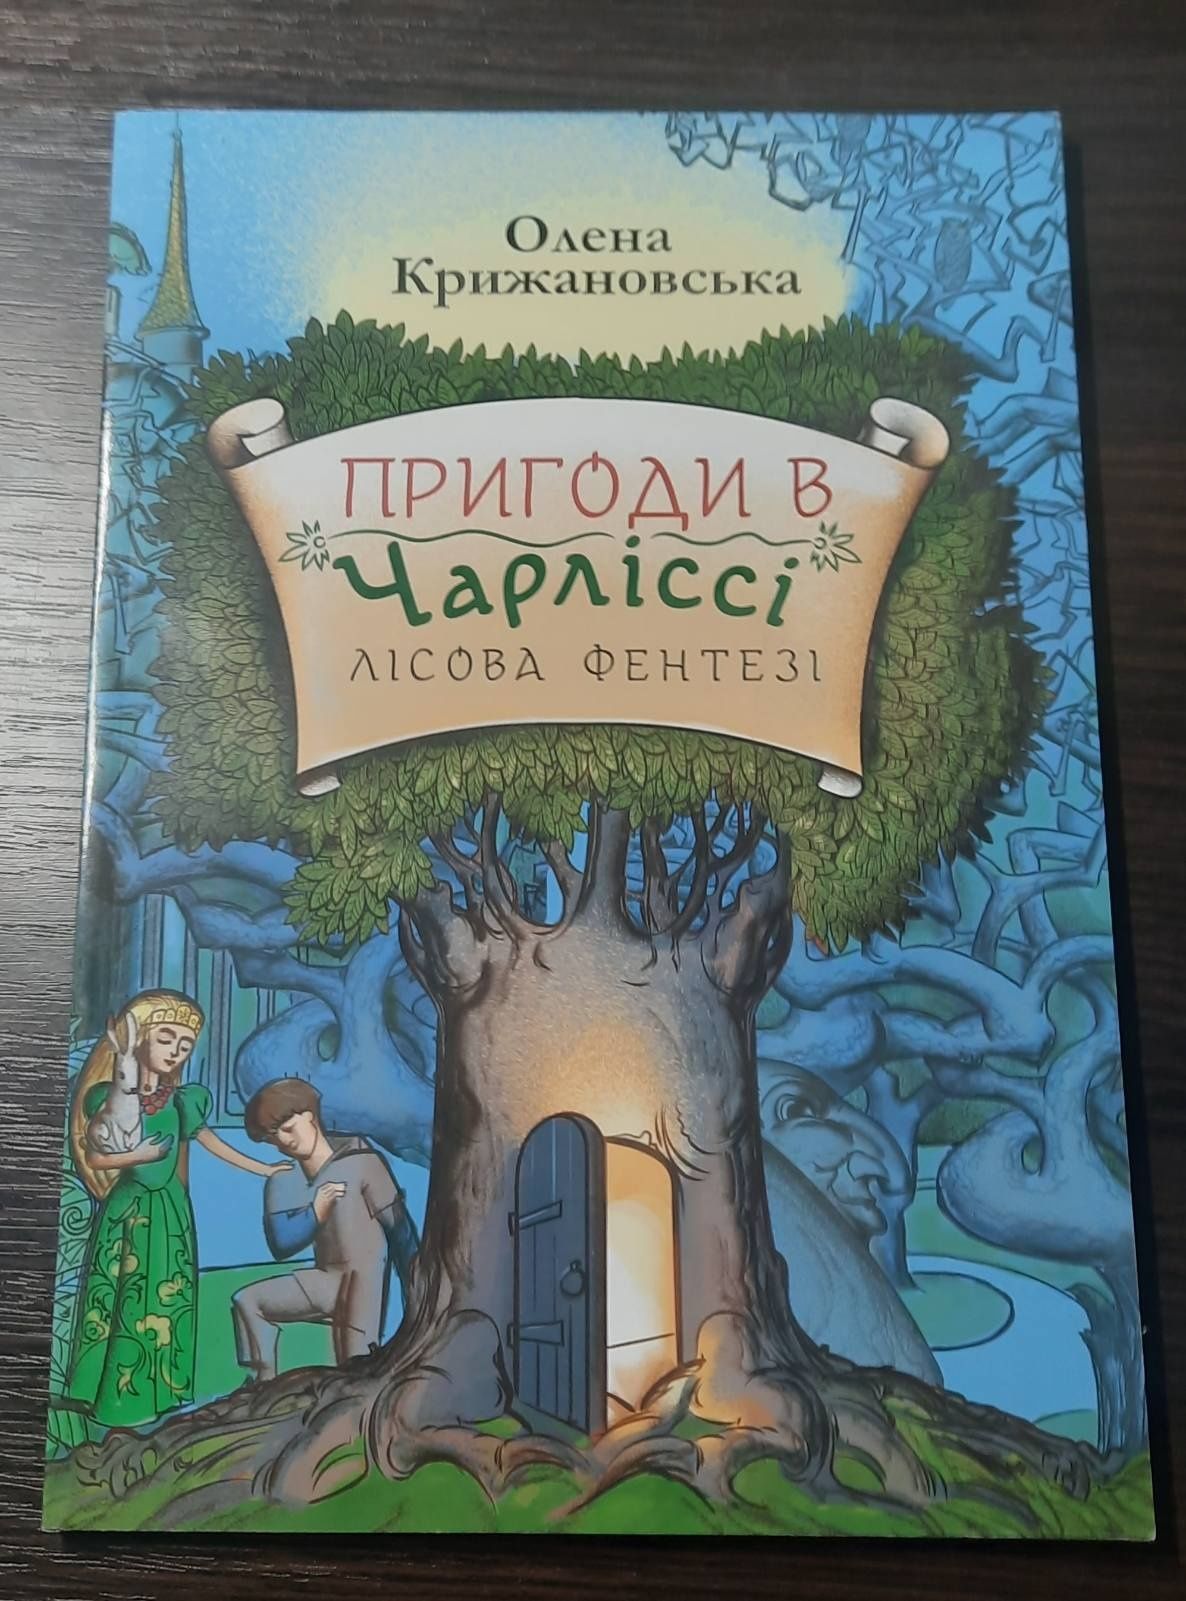 Цікава дитяча книга Олени Крижановської